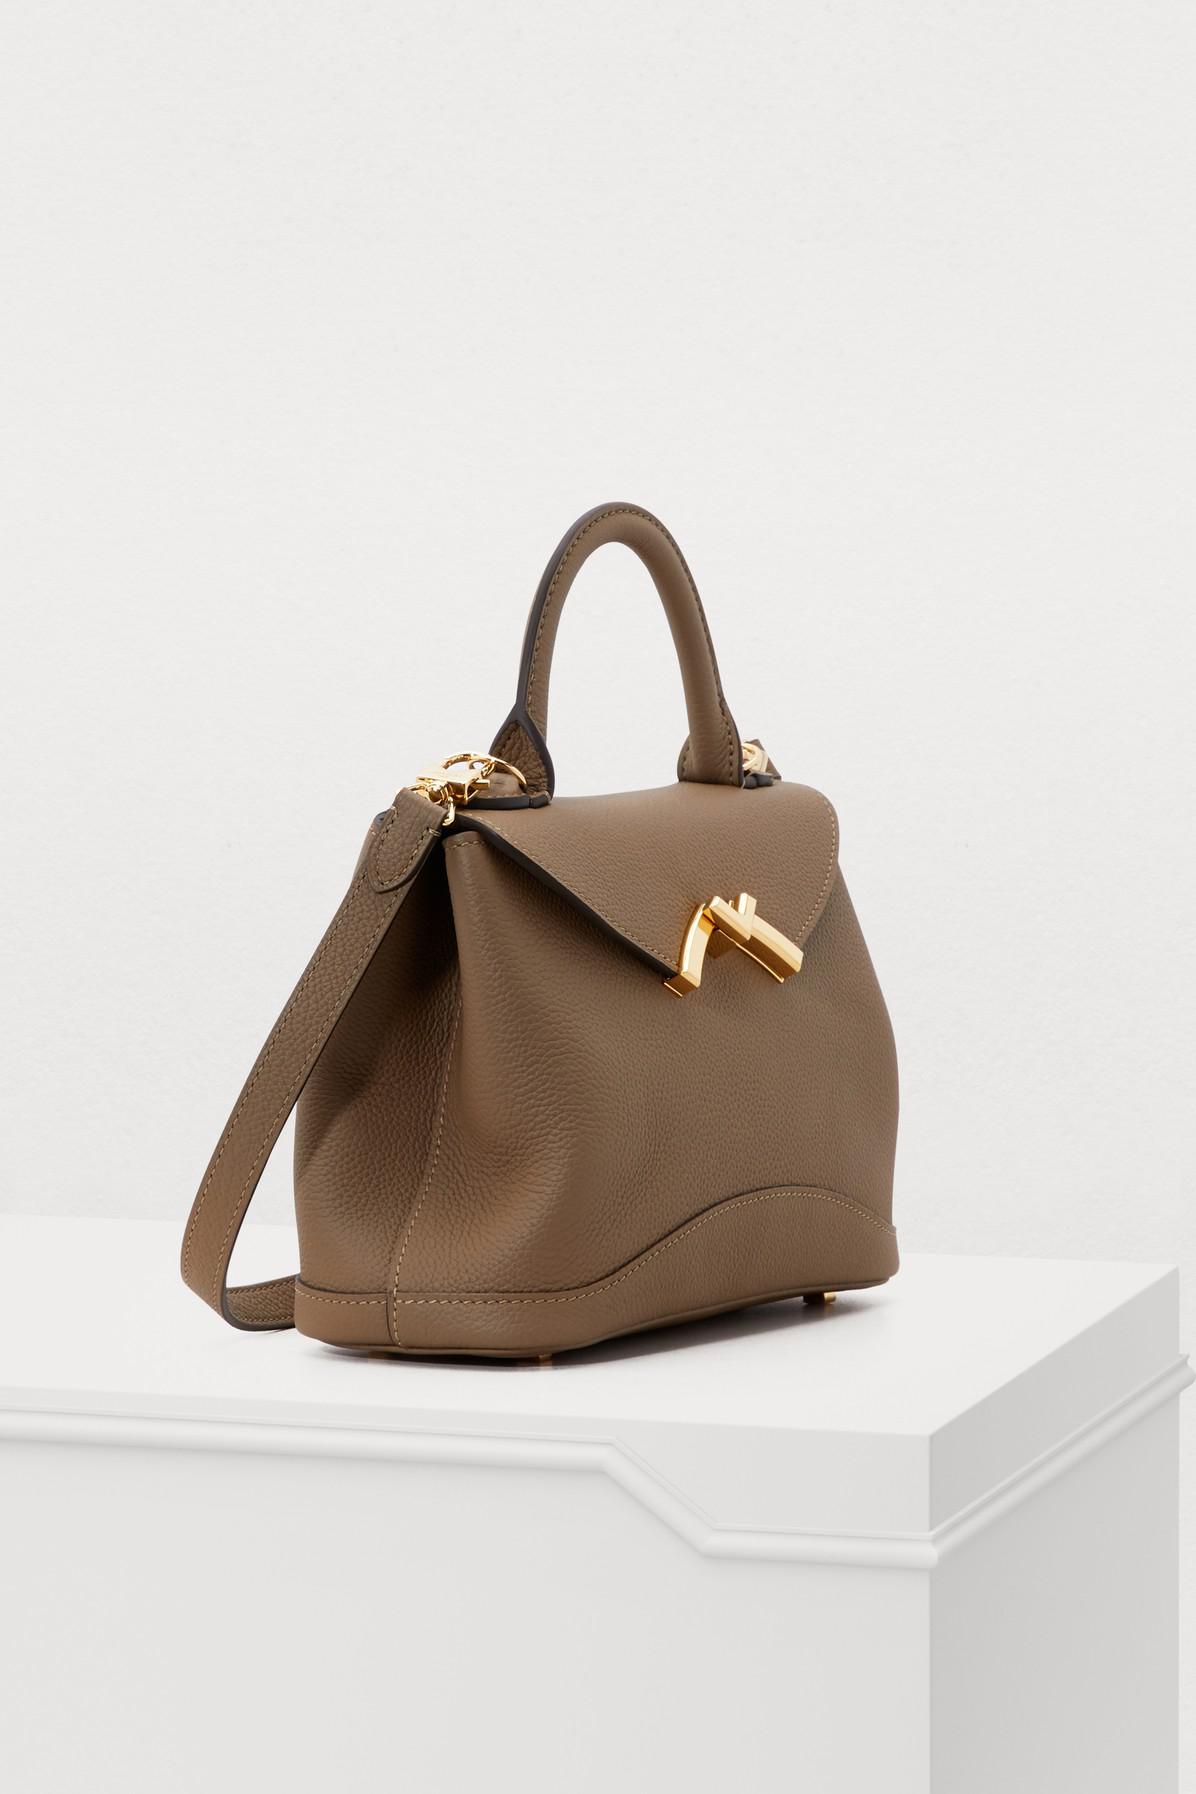 Moynat Gaby Bb Handbag in Brown